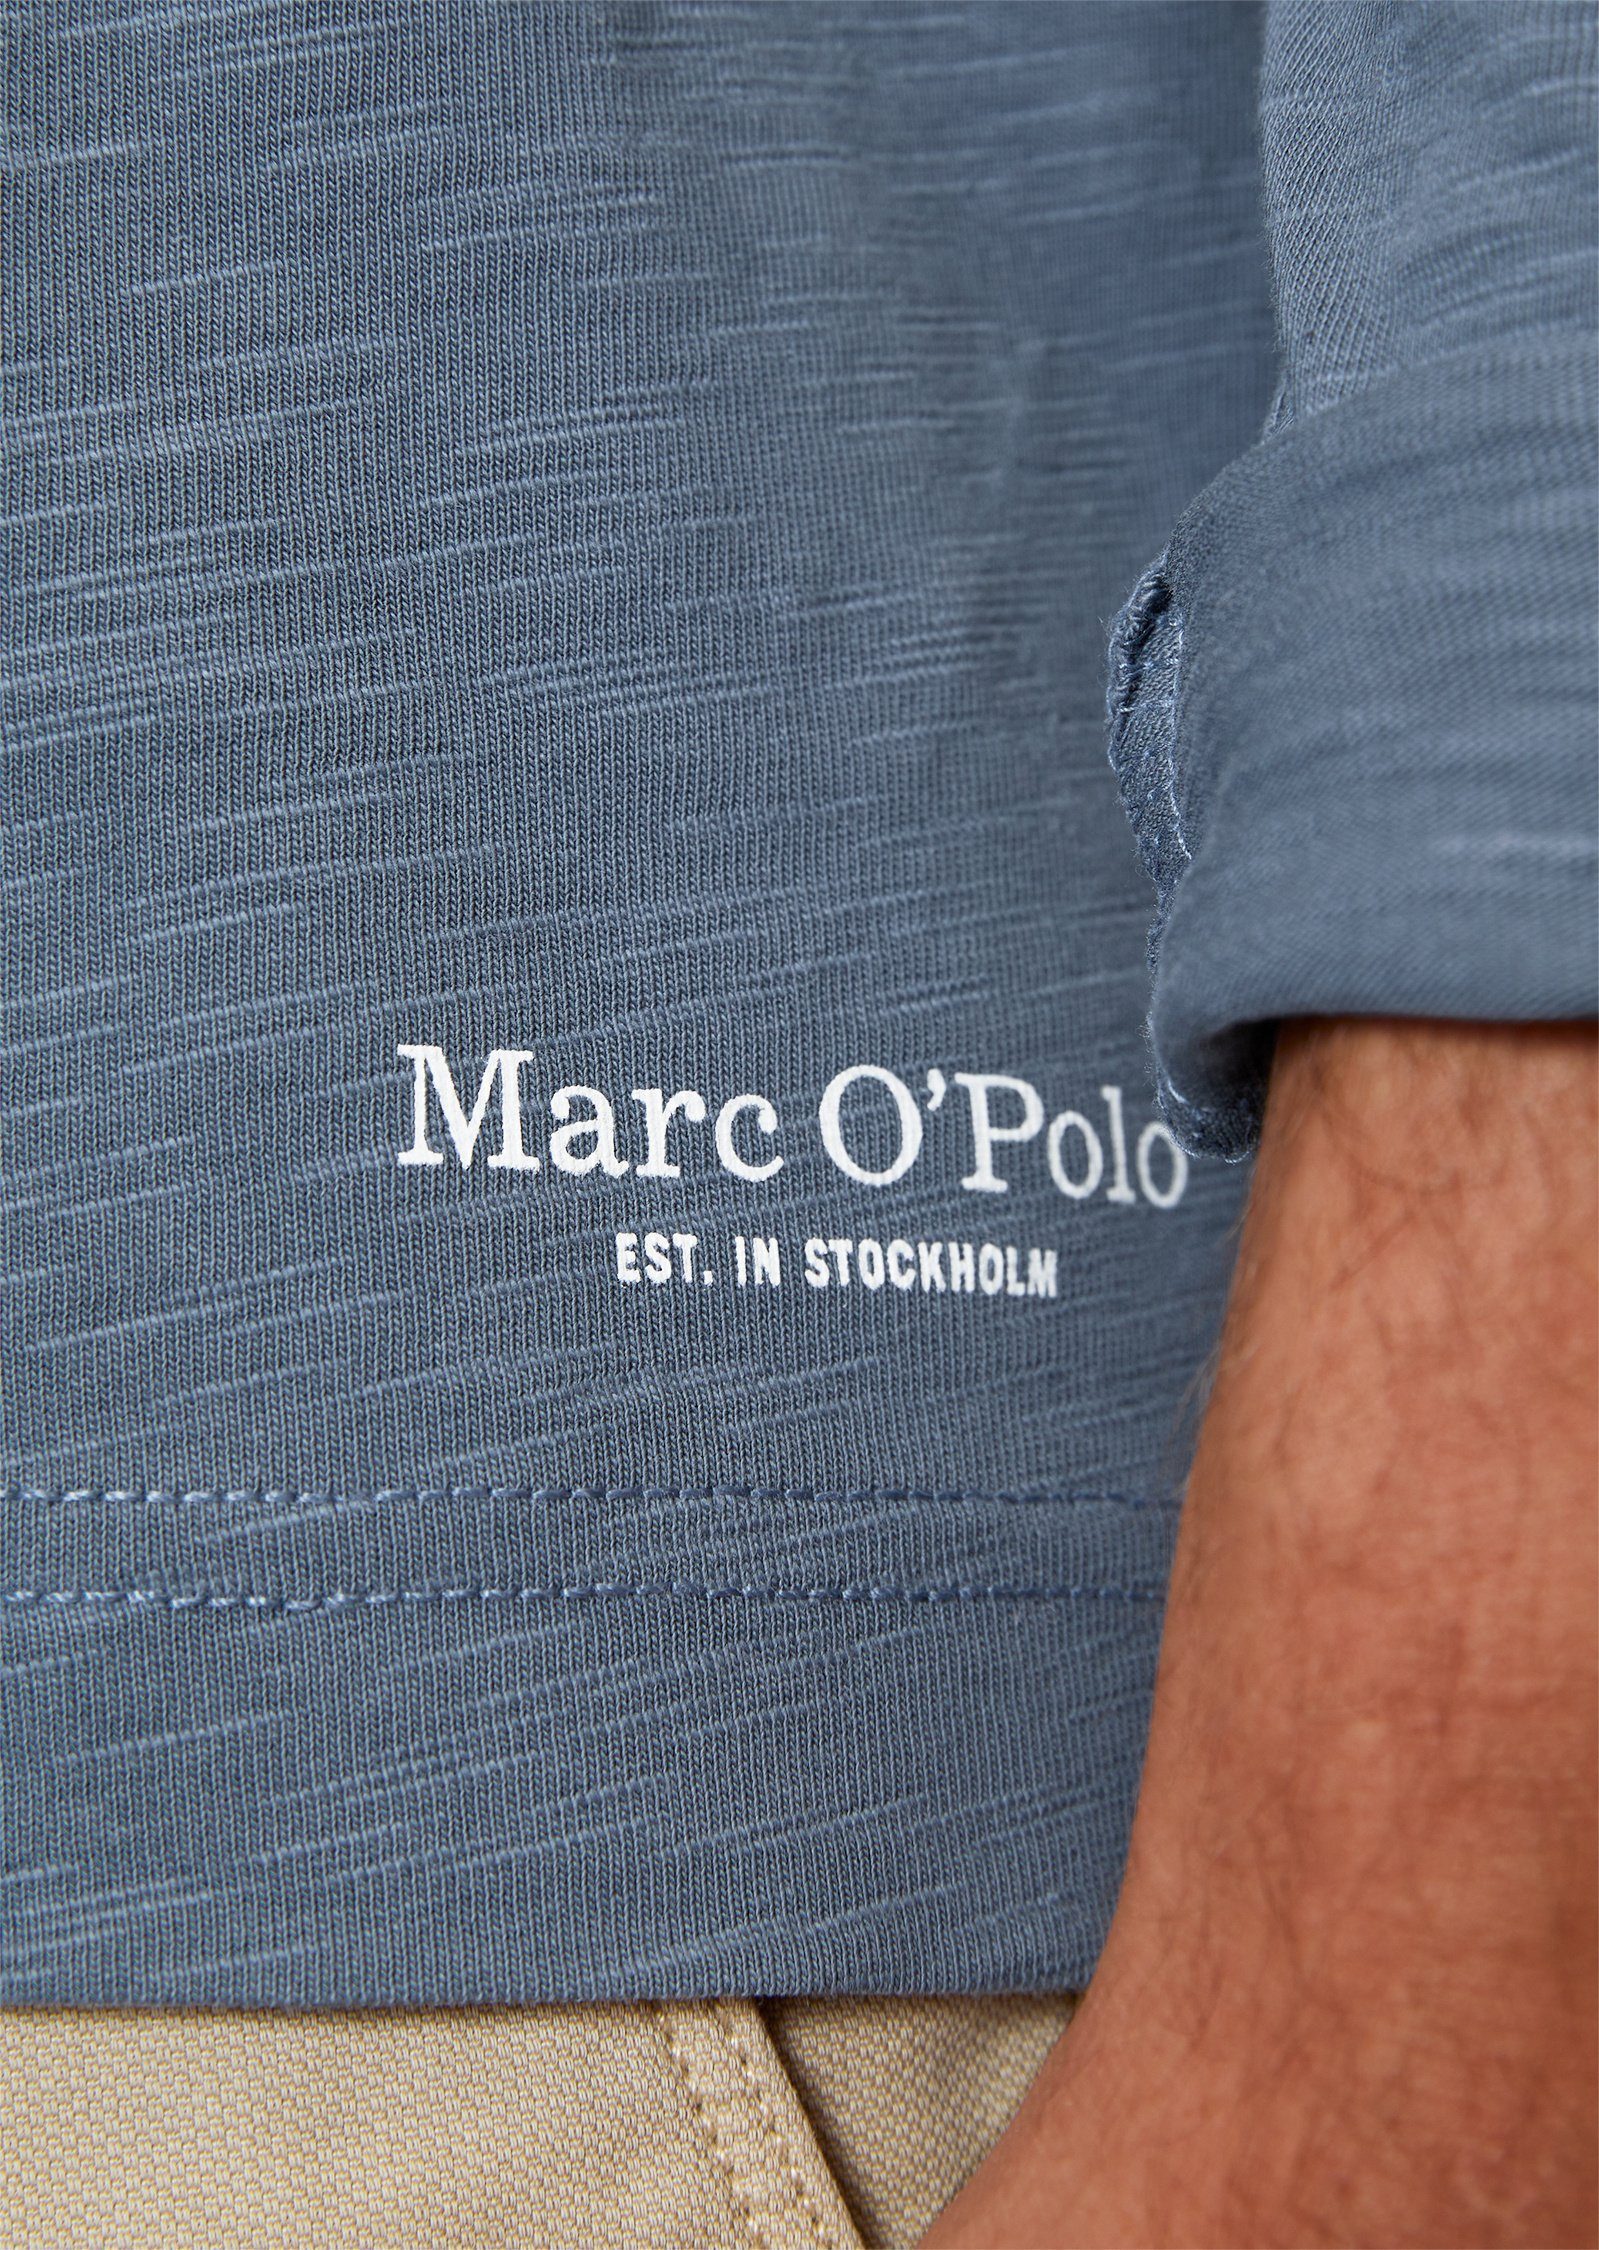 Heavy-Slub-Jersey-Qualität O'Polo Marc in blau Langarmshirt